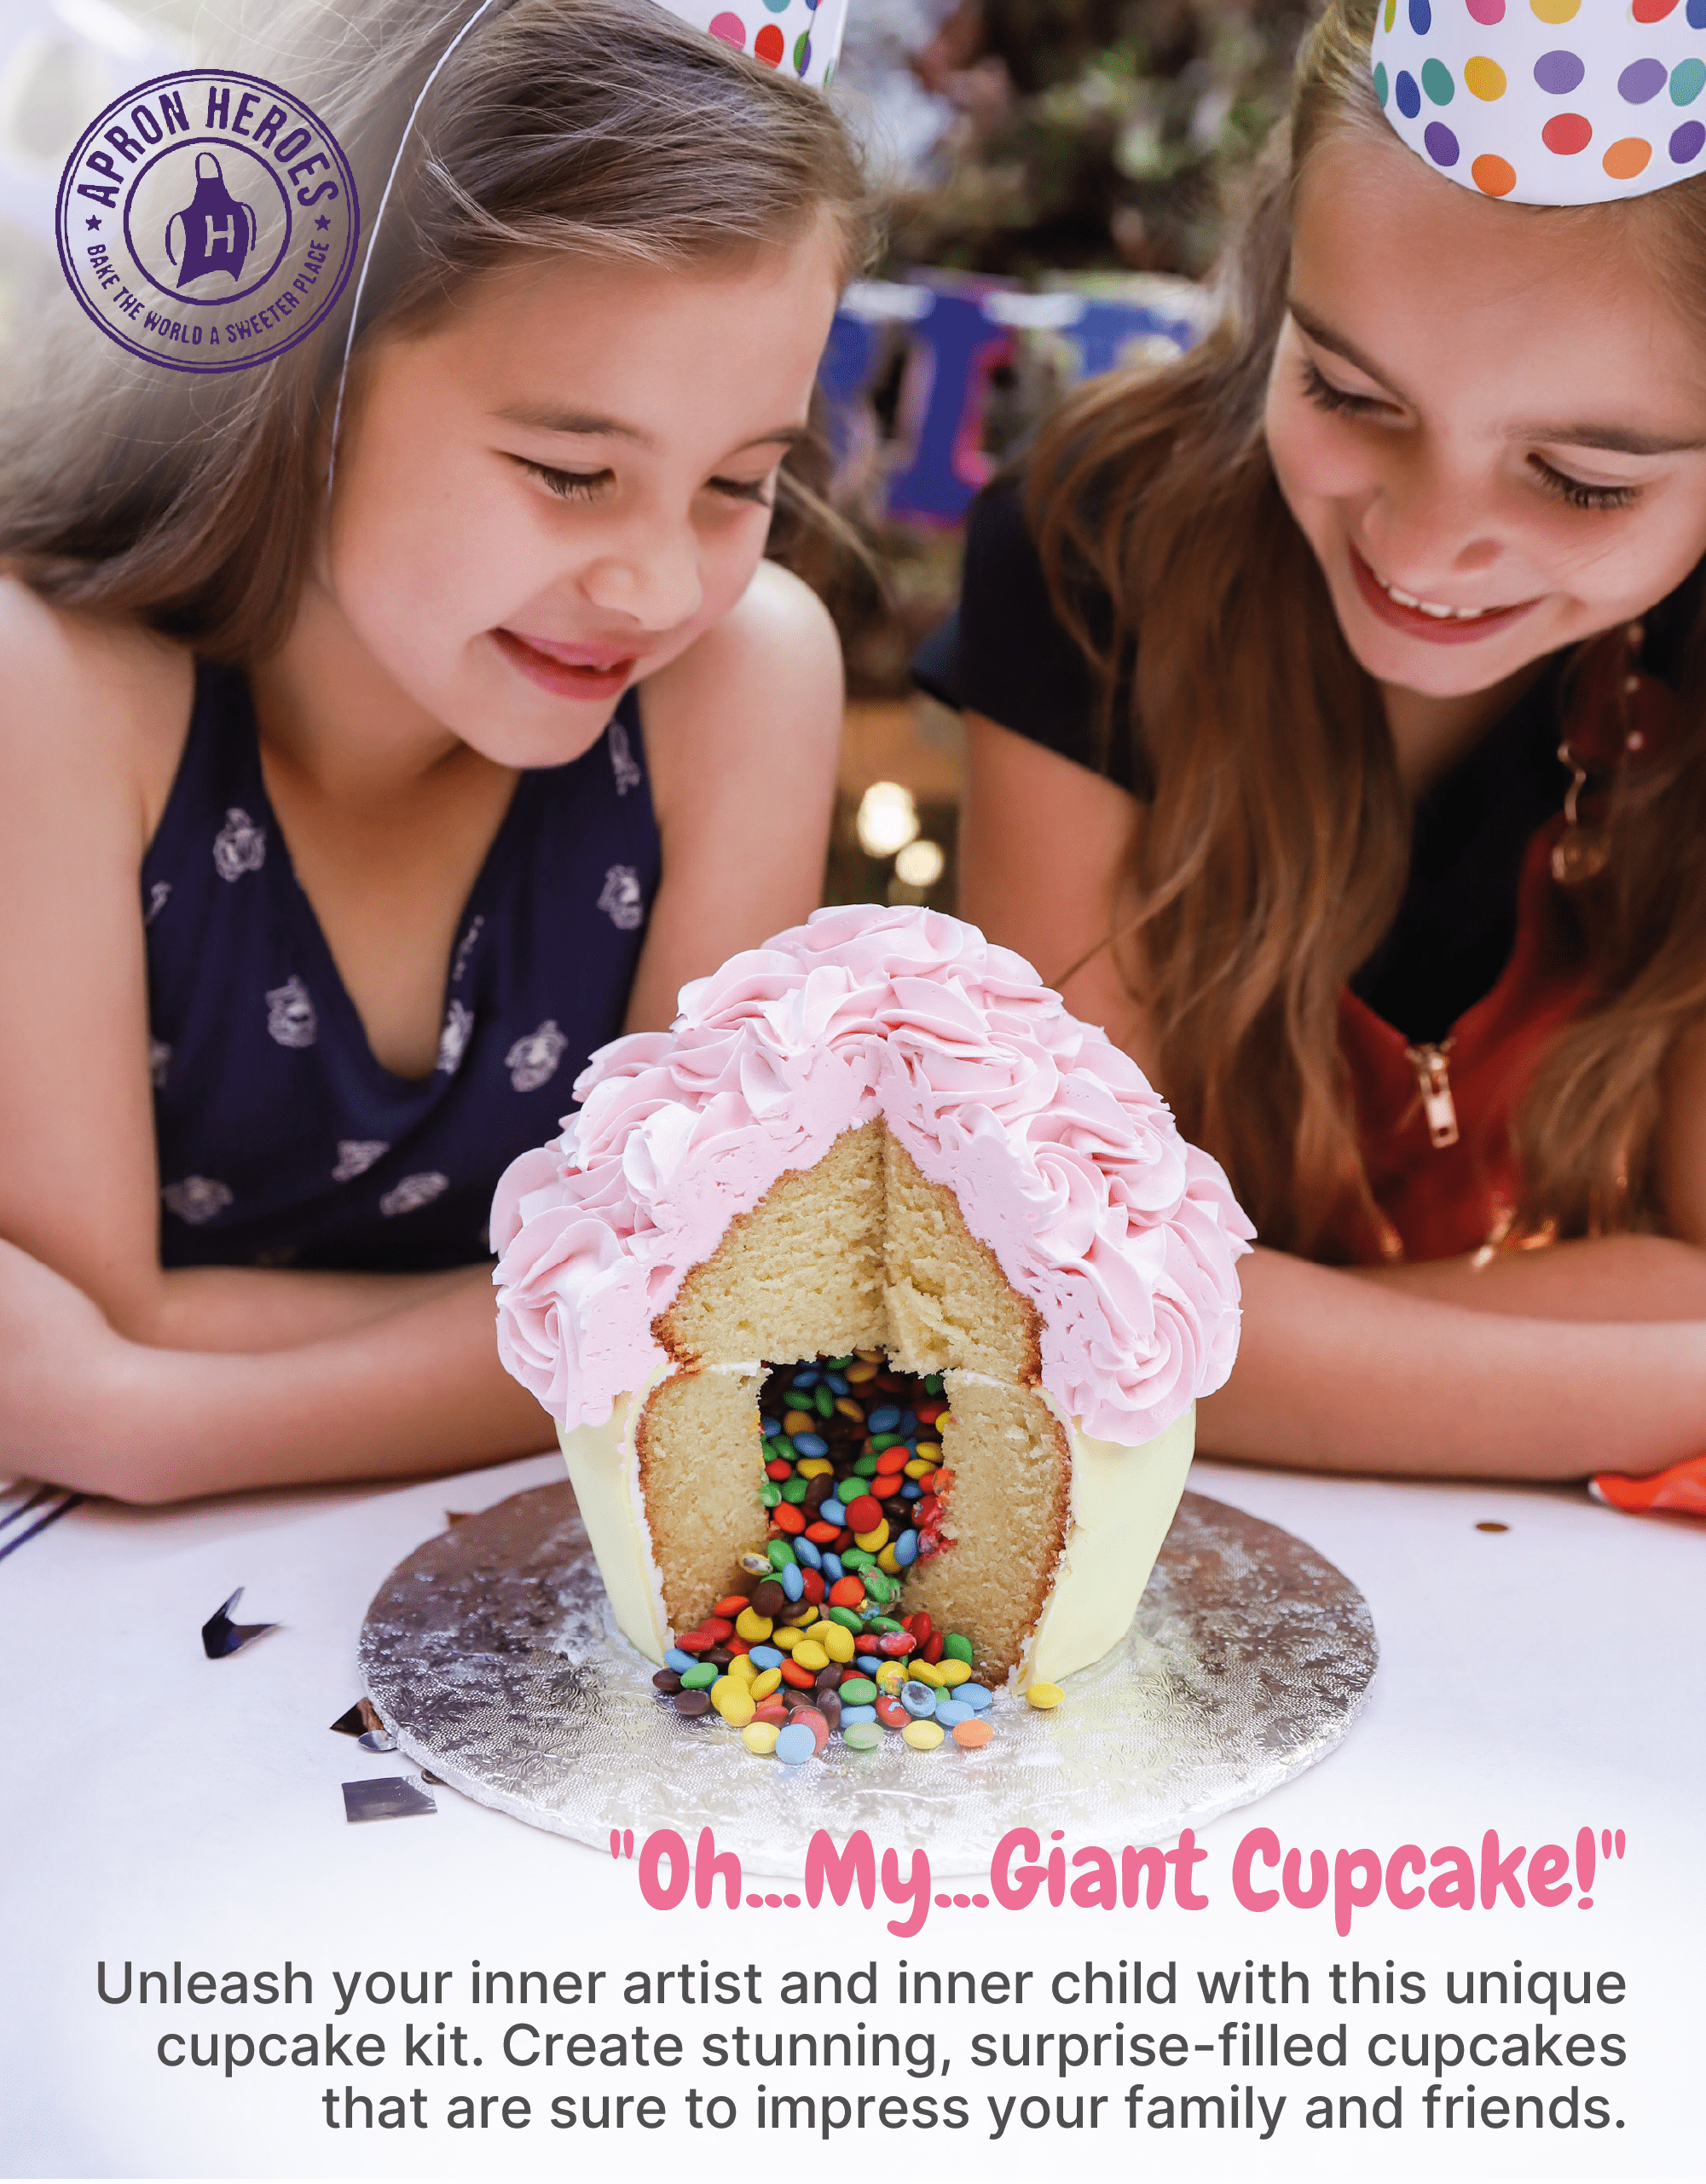 The Bake More: Wilton's Giant Cupcake Pan